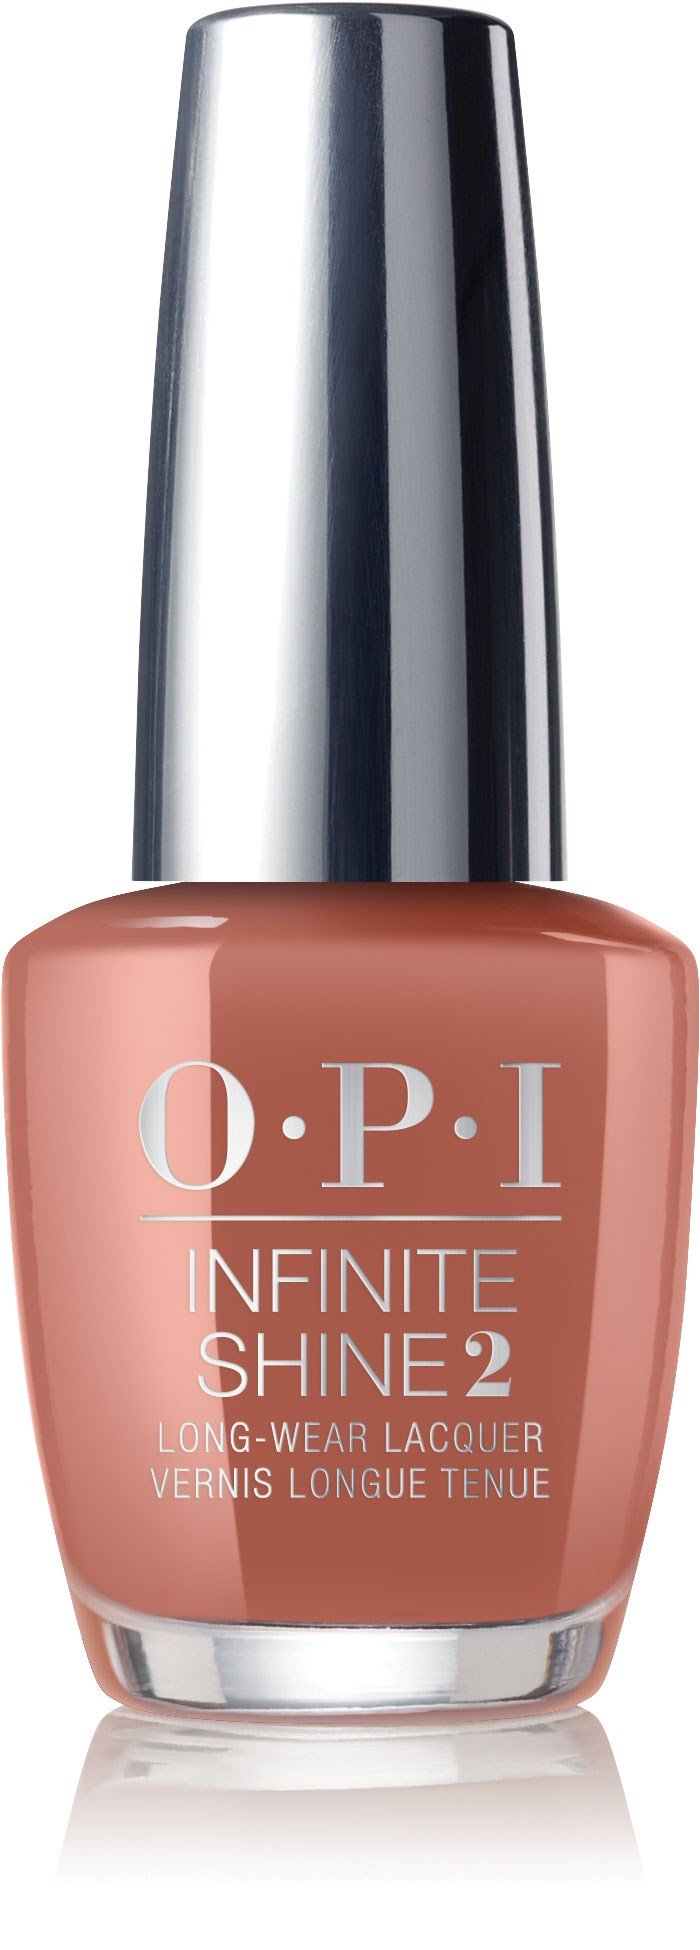 OPI Infinite Shine - Alce de chocolate